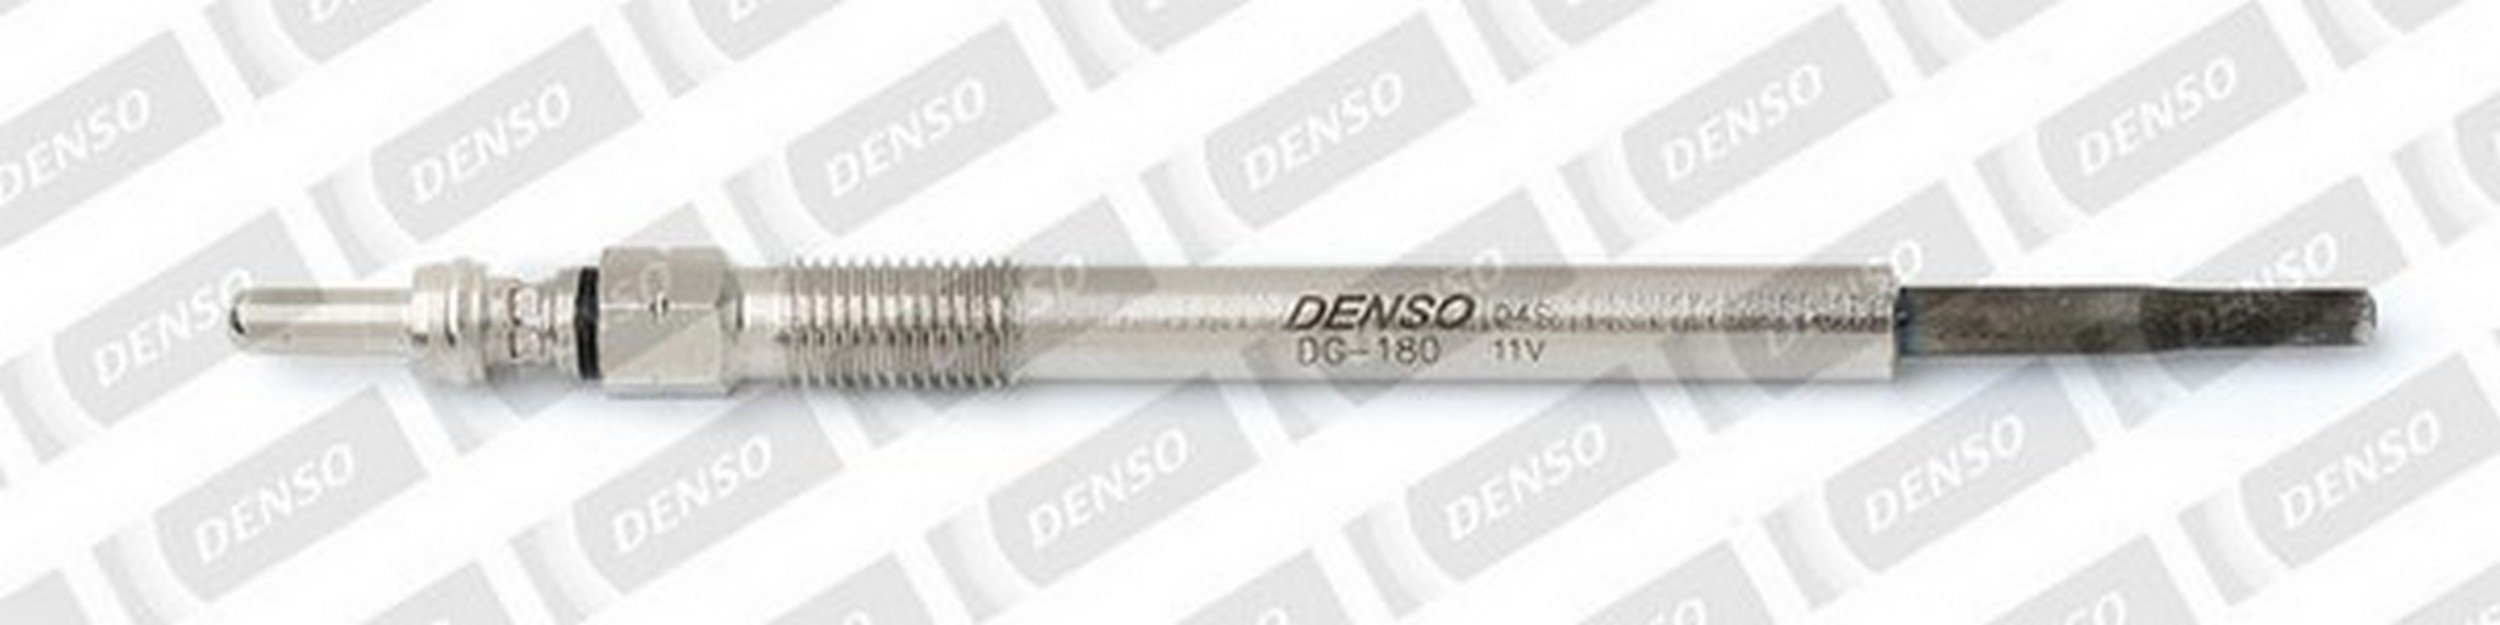 DENSO-AU DG-180